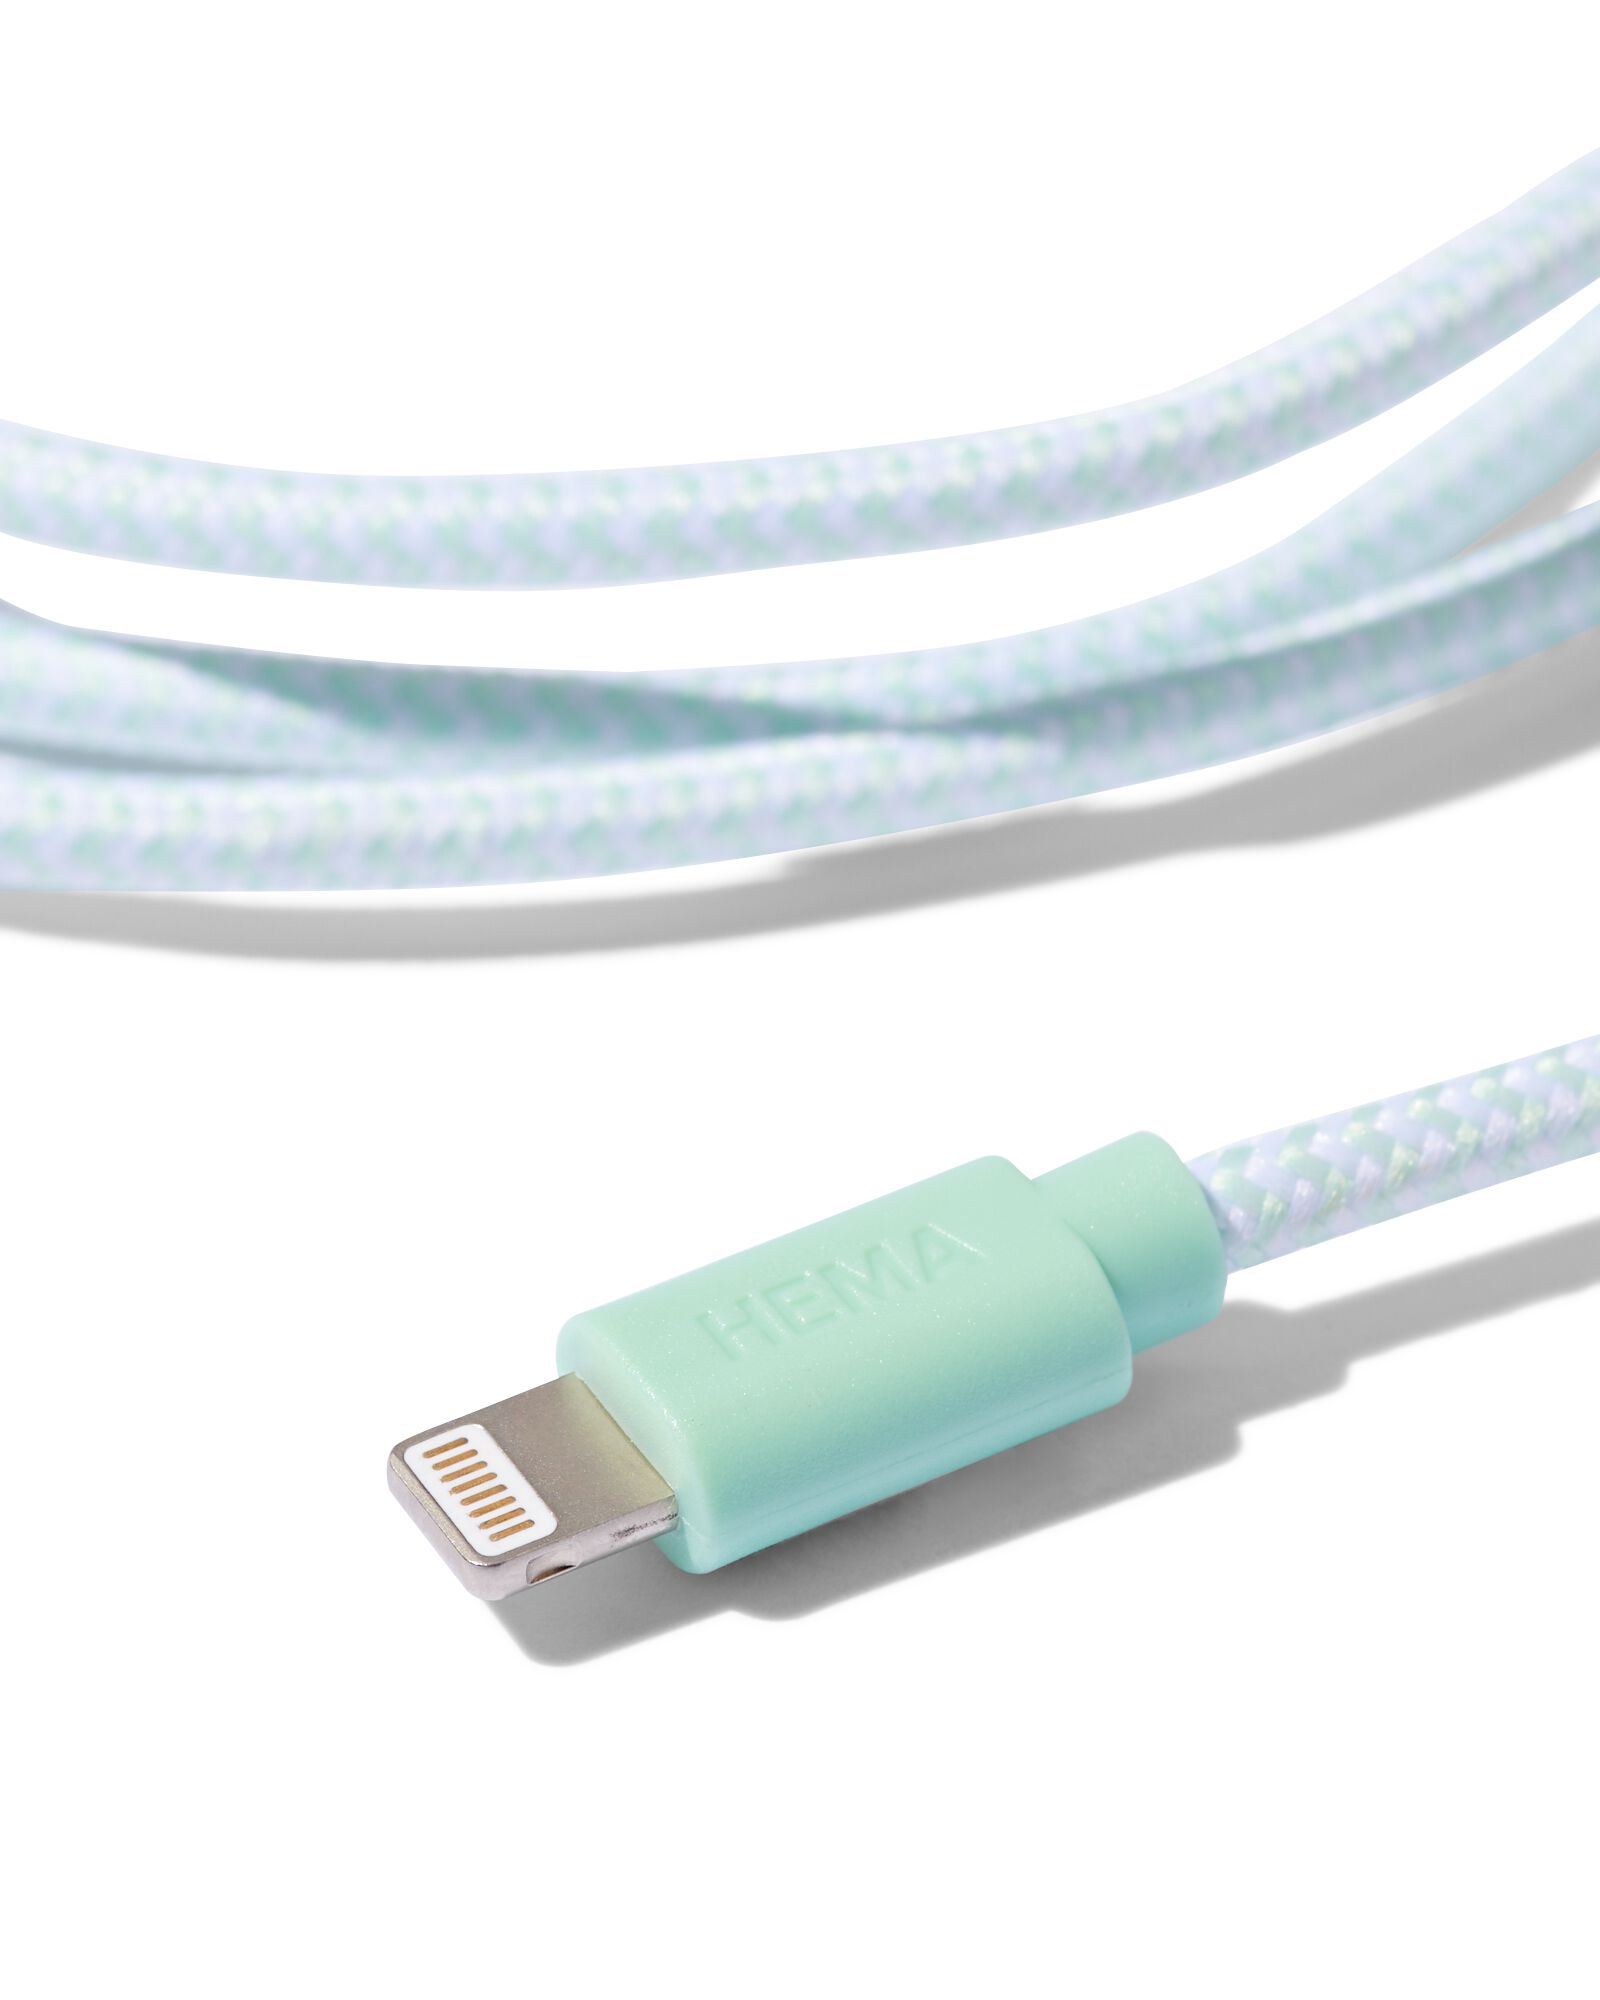 laadkabel USB-C/8-PIN 1.5m - 39630174 - HEMA